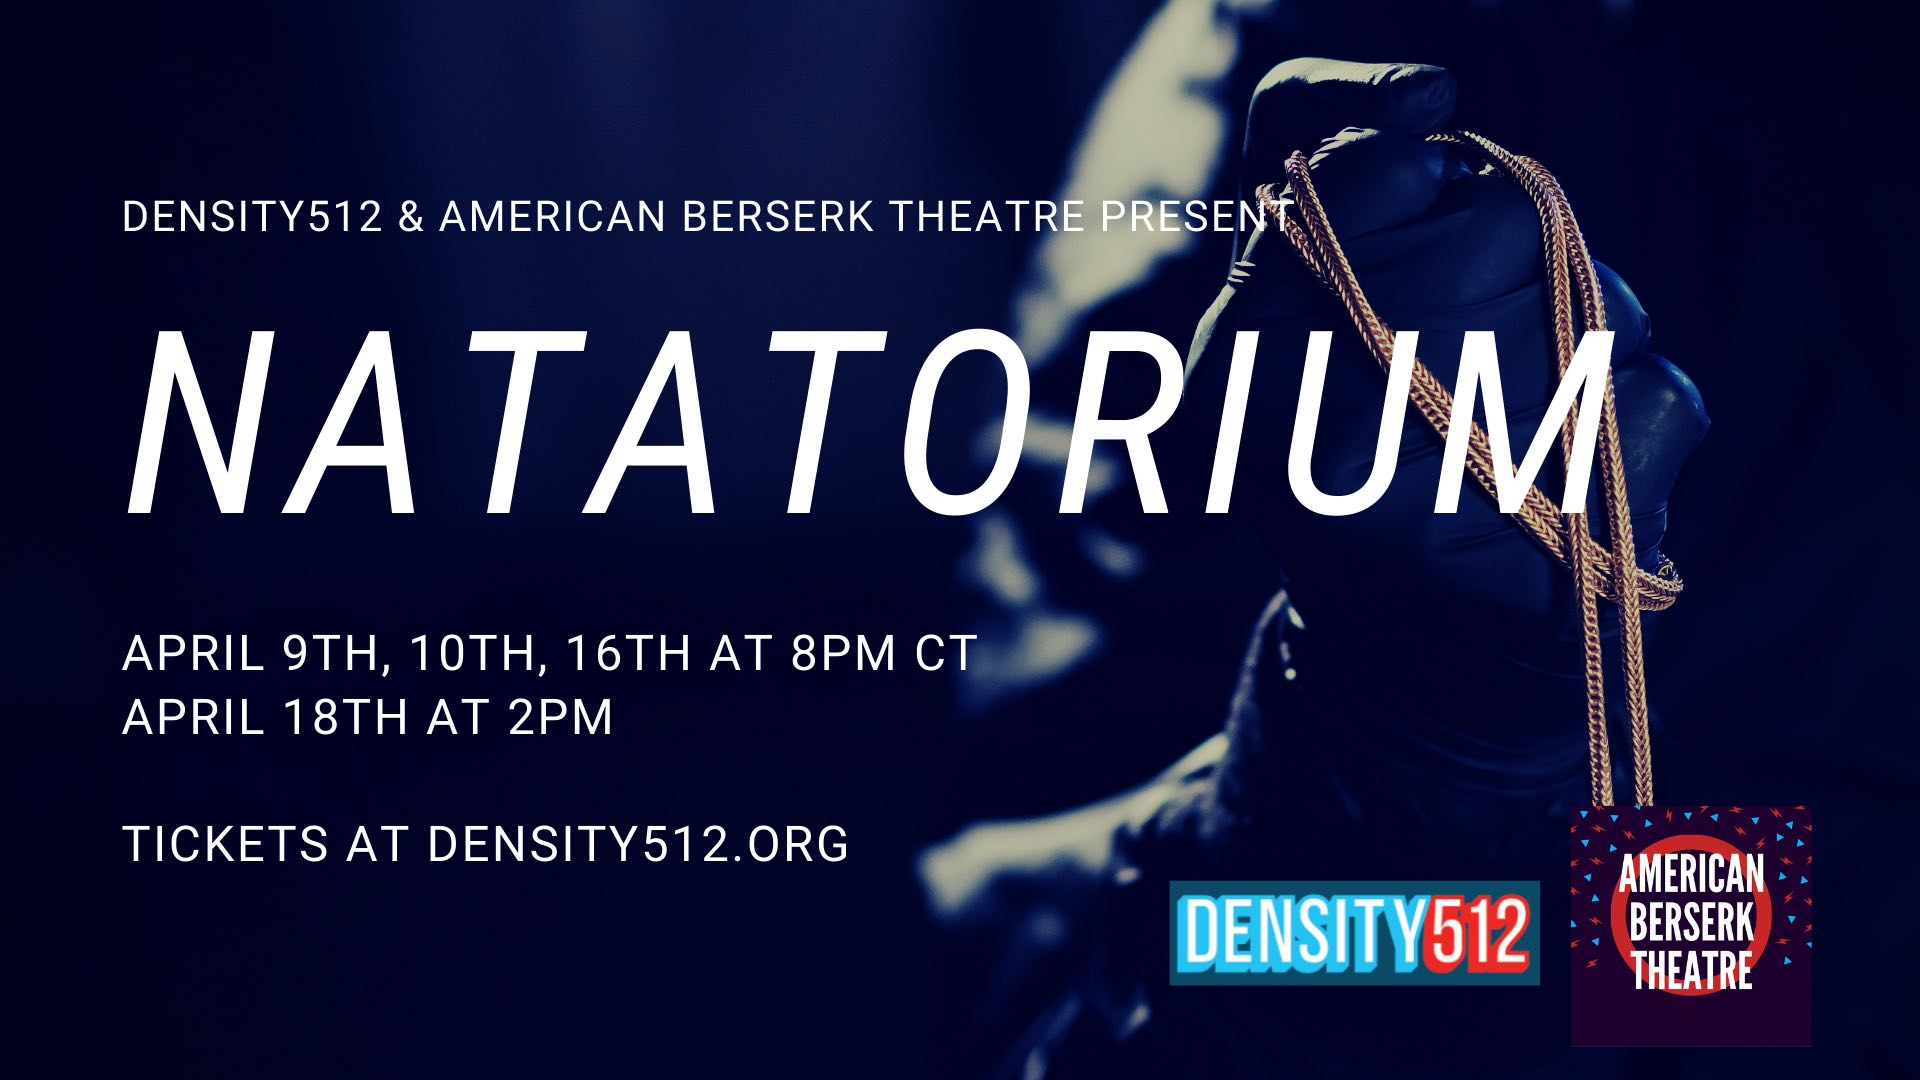 Natatorium by American Berserk Theatre